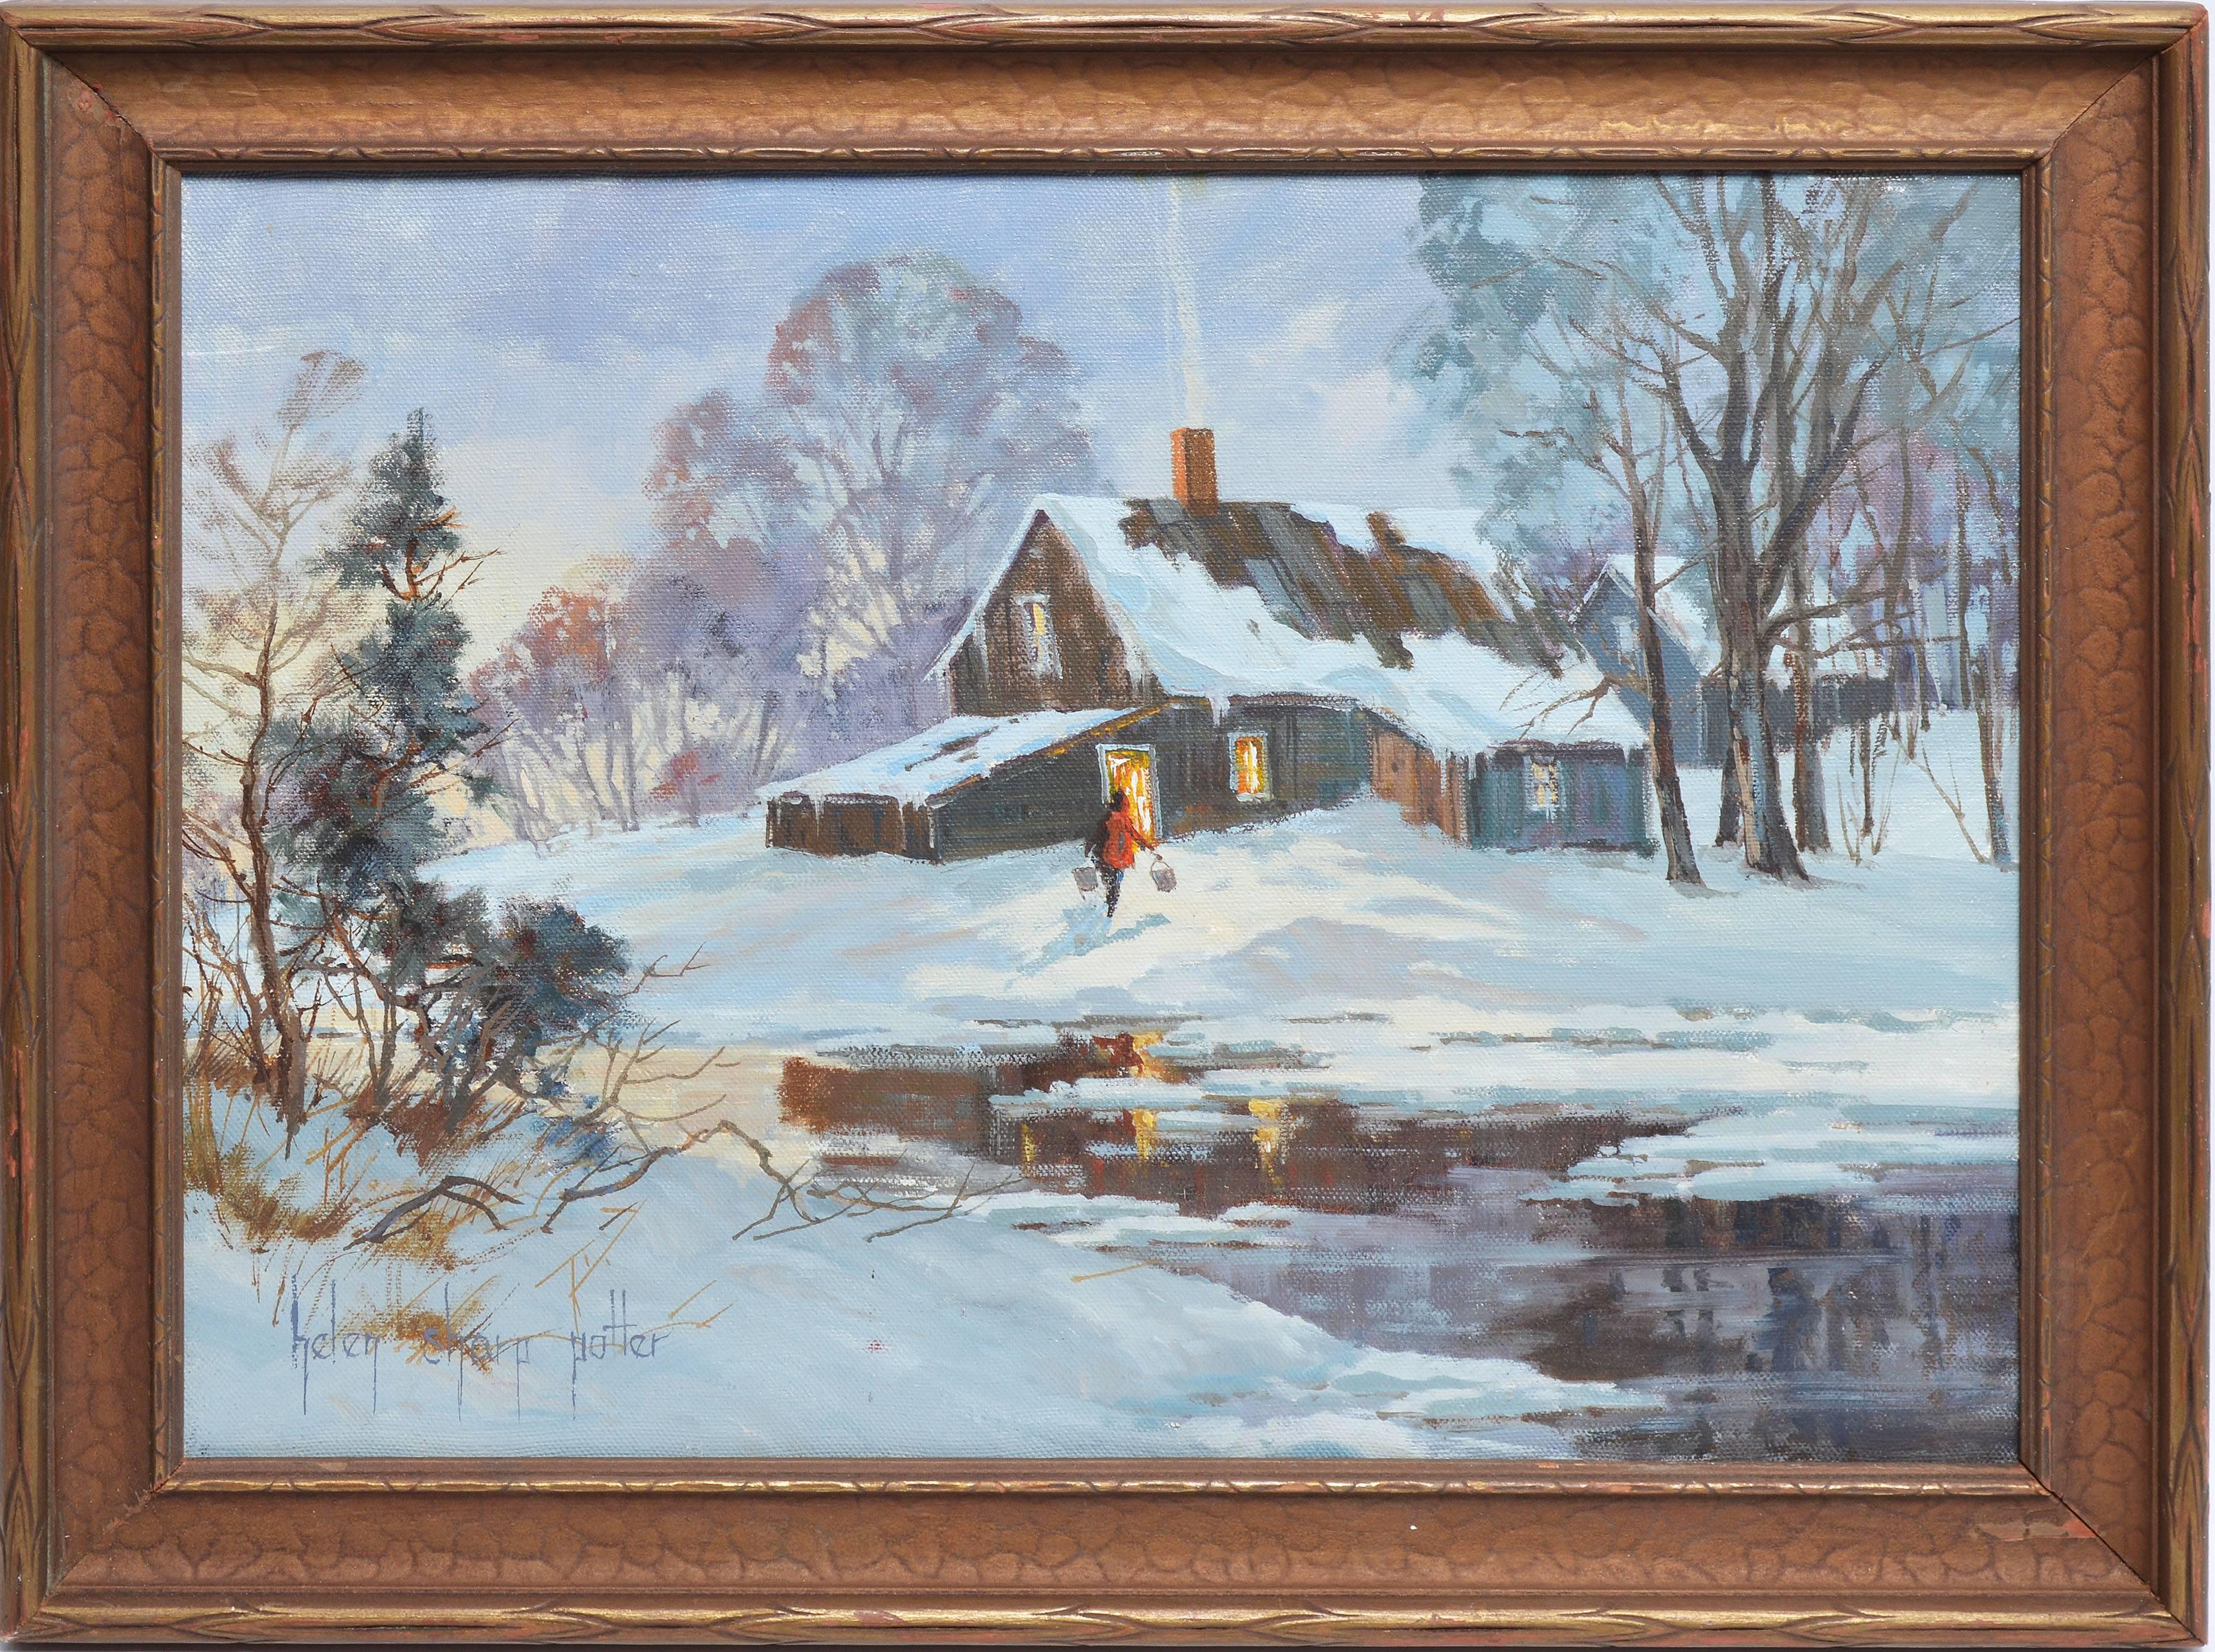 Helen Sharp Potter Landscape Painting - Winter Cabin Landscape